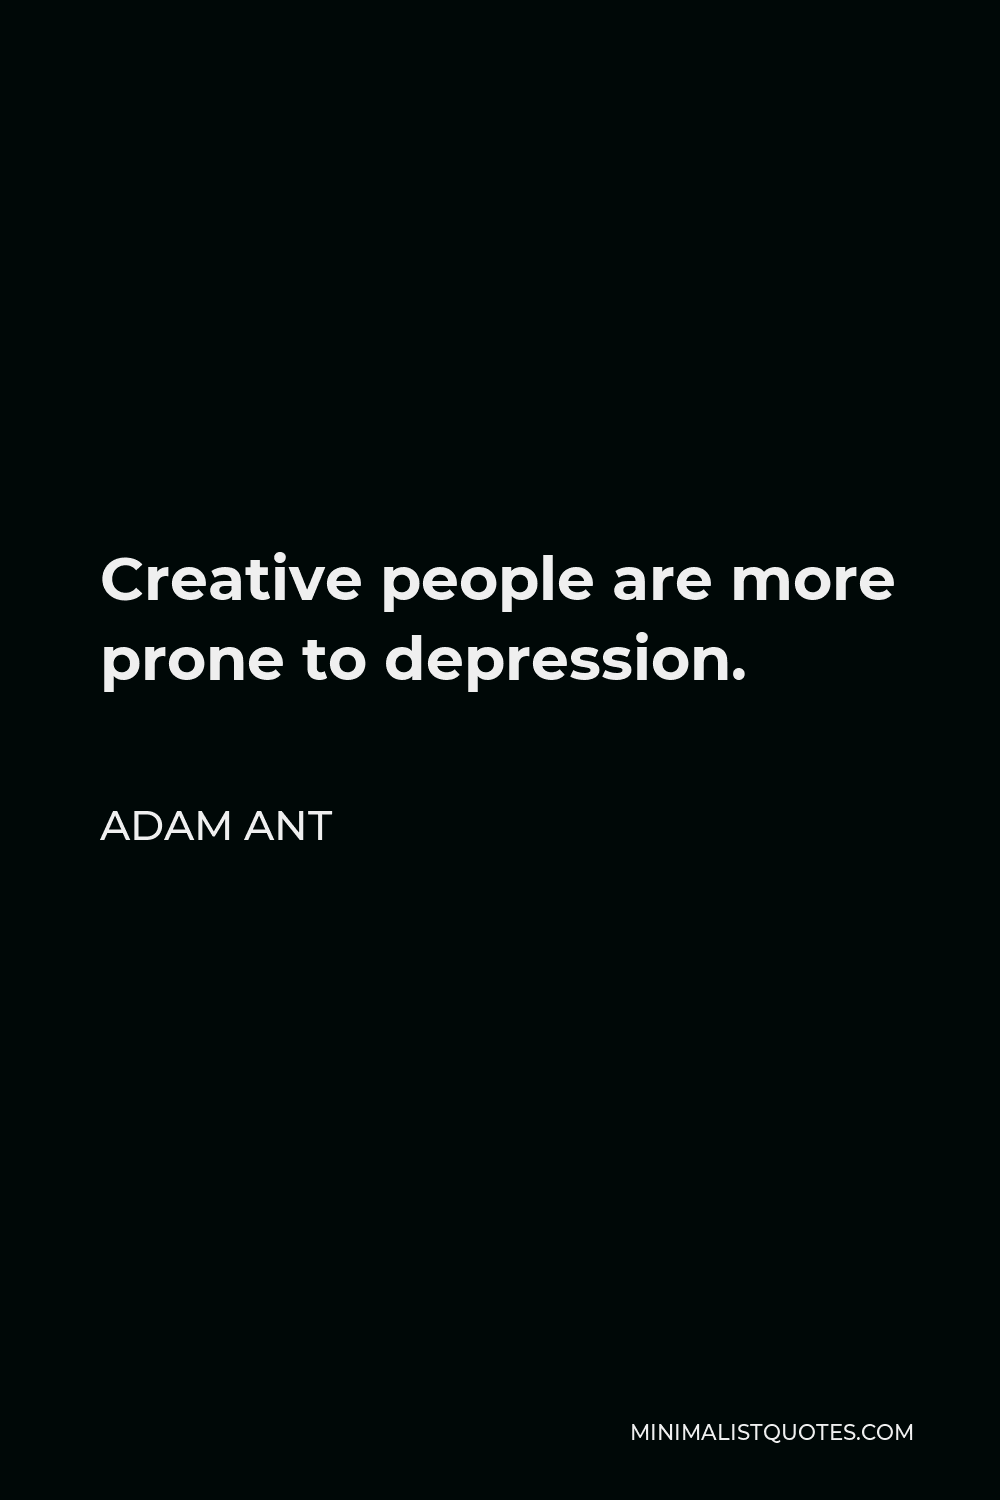 Adam Ant Quote - Creative people are more prone to depression.